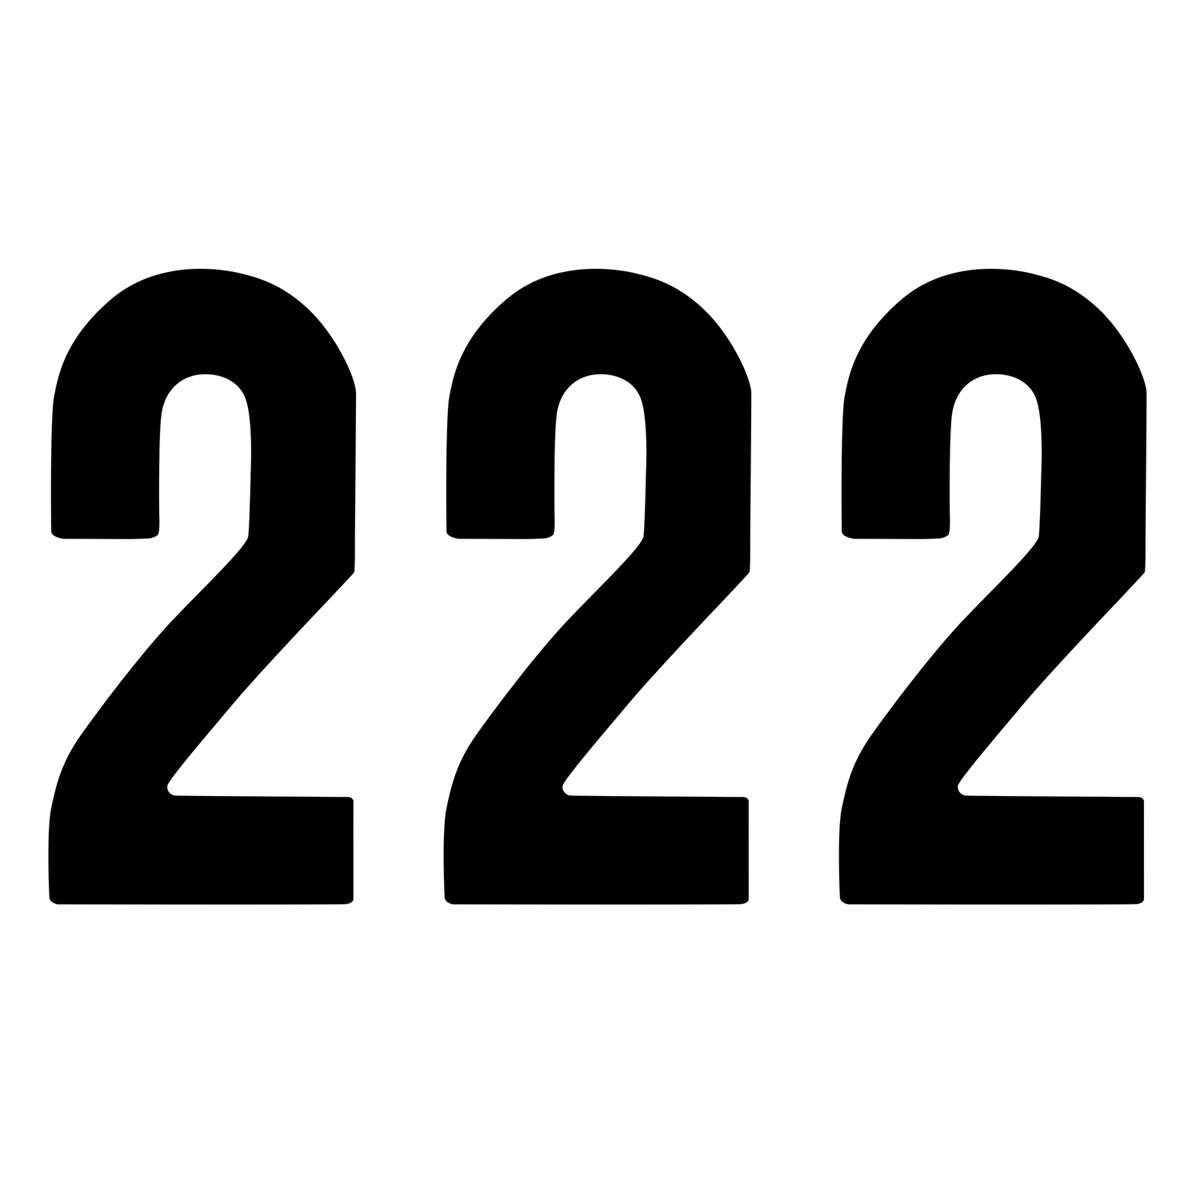 ZAP Kit Numeri Gara Racing Number 2, Black, 14 cm, 3 pieces